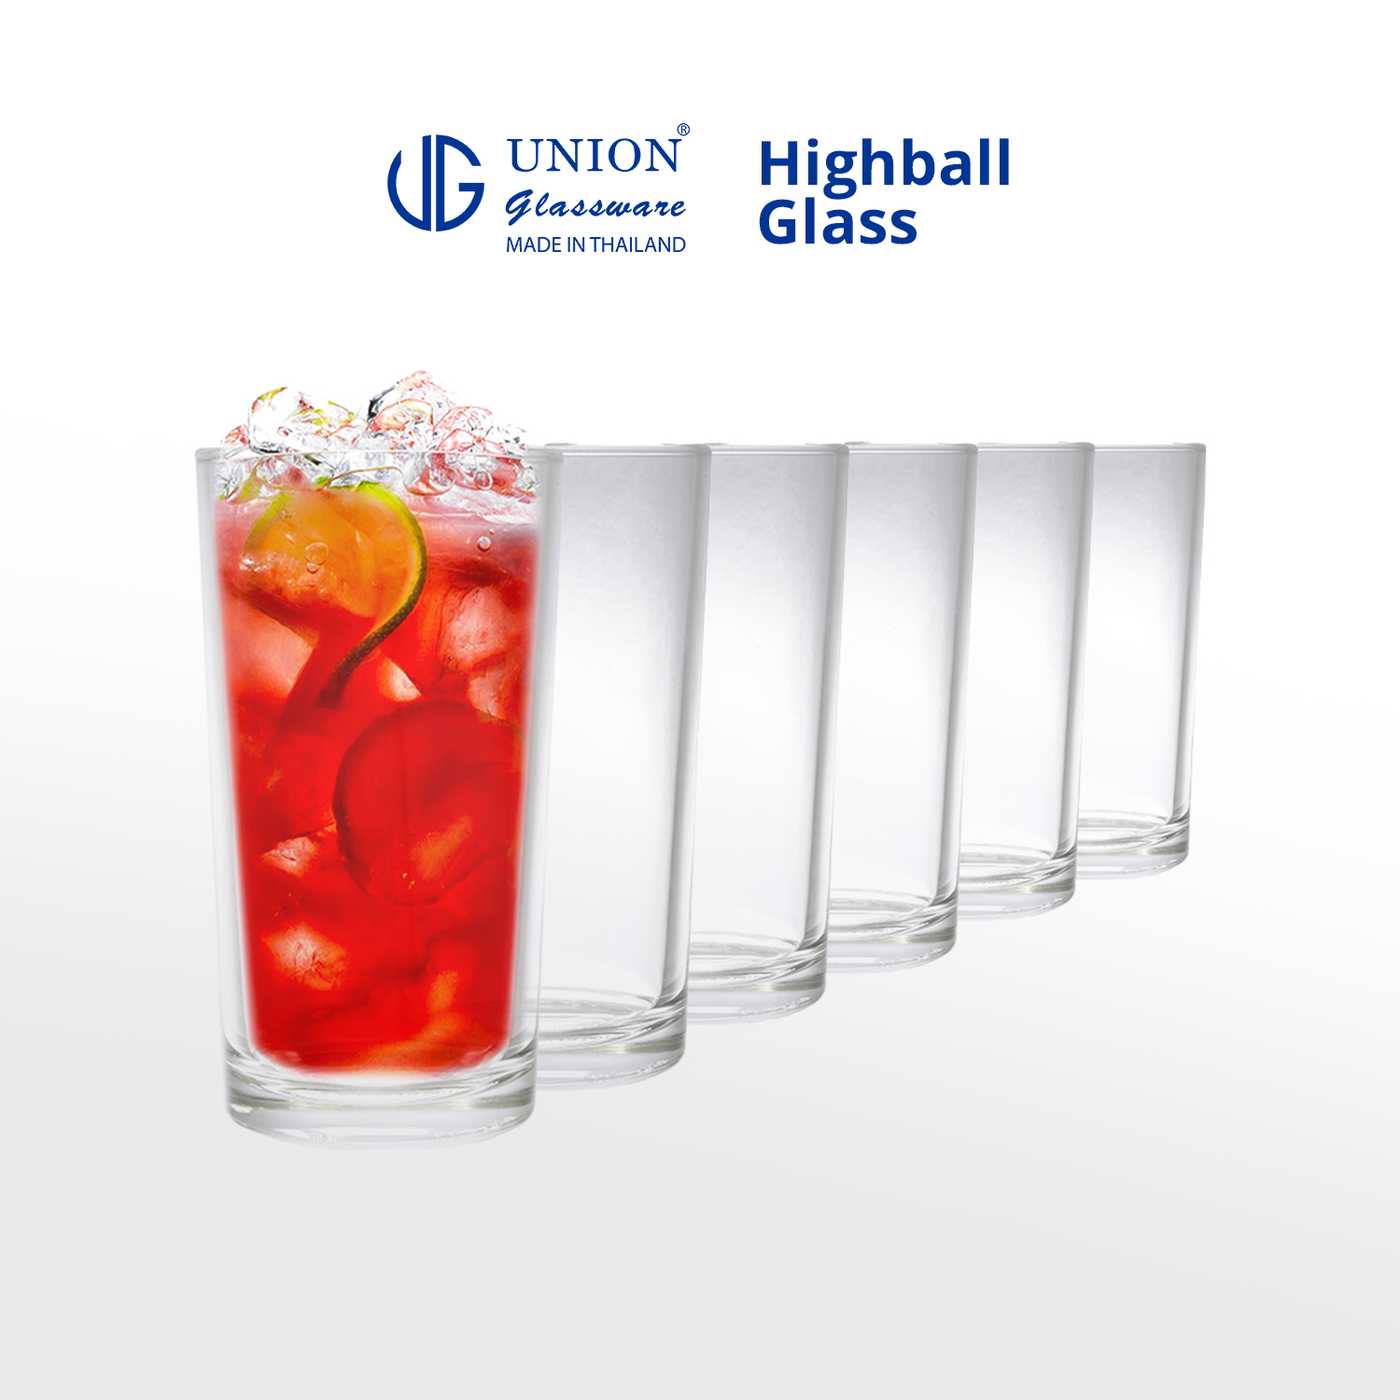 UNION GLASS Thailand Premium Clear Glass Highball Glass 255ml Set of 6